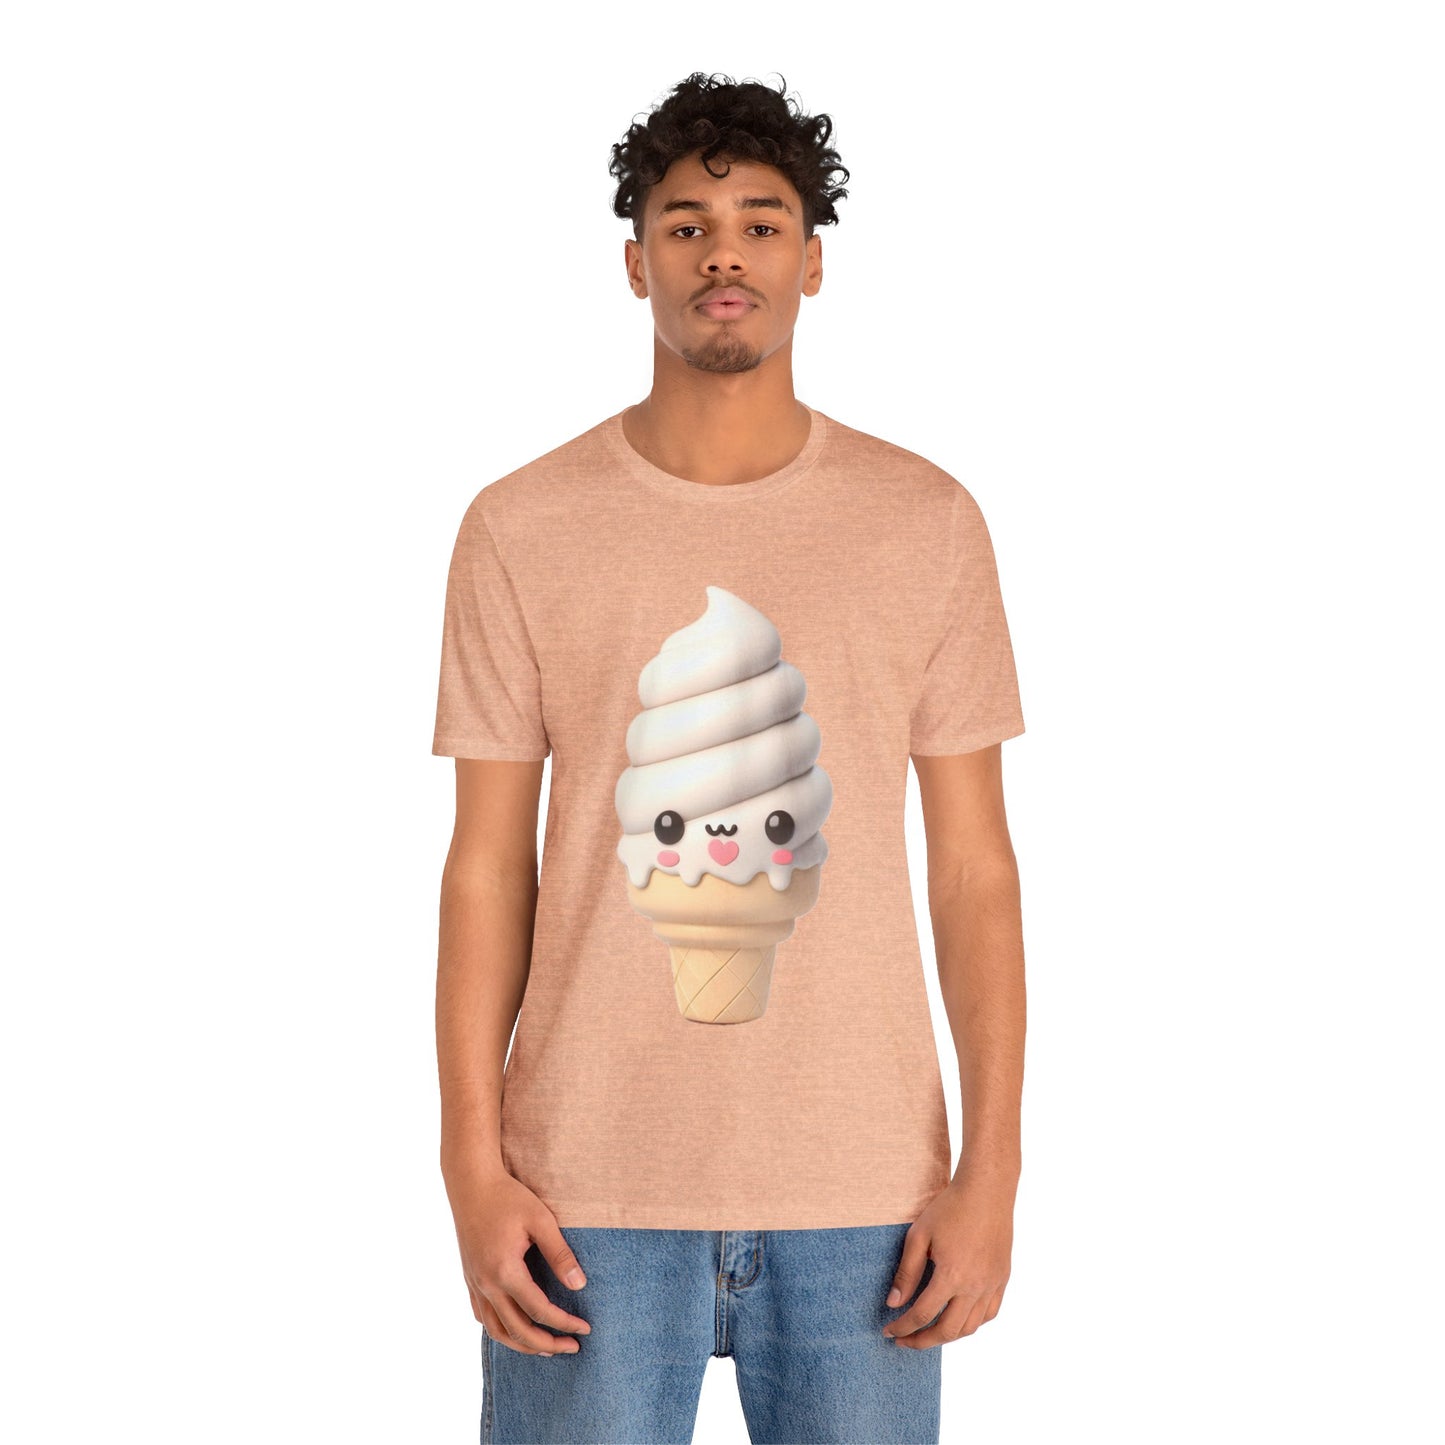 Kawaii Vanilla Ice Cream T-Shirt: Adorable Sweet Treat Design